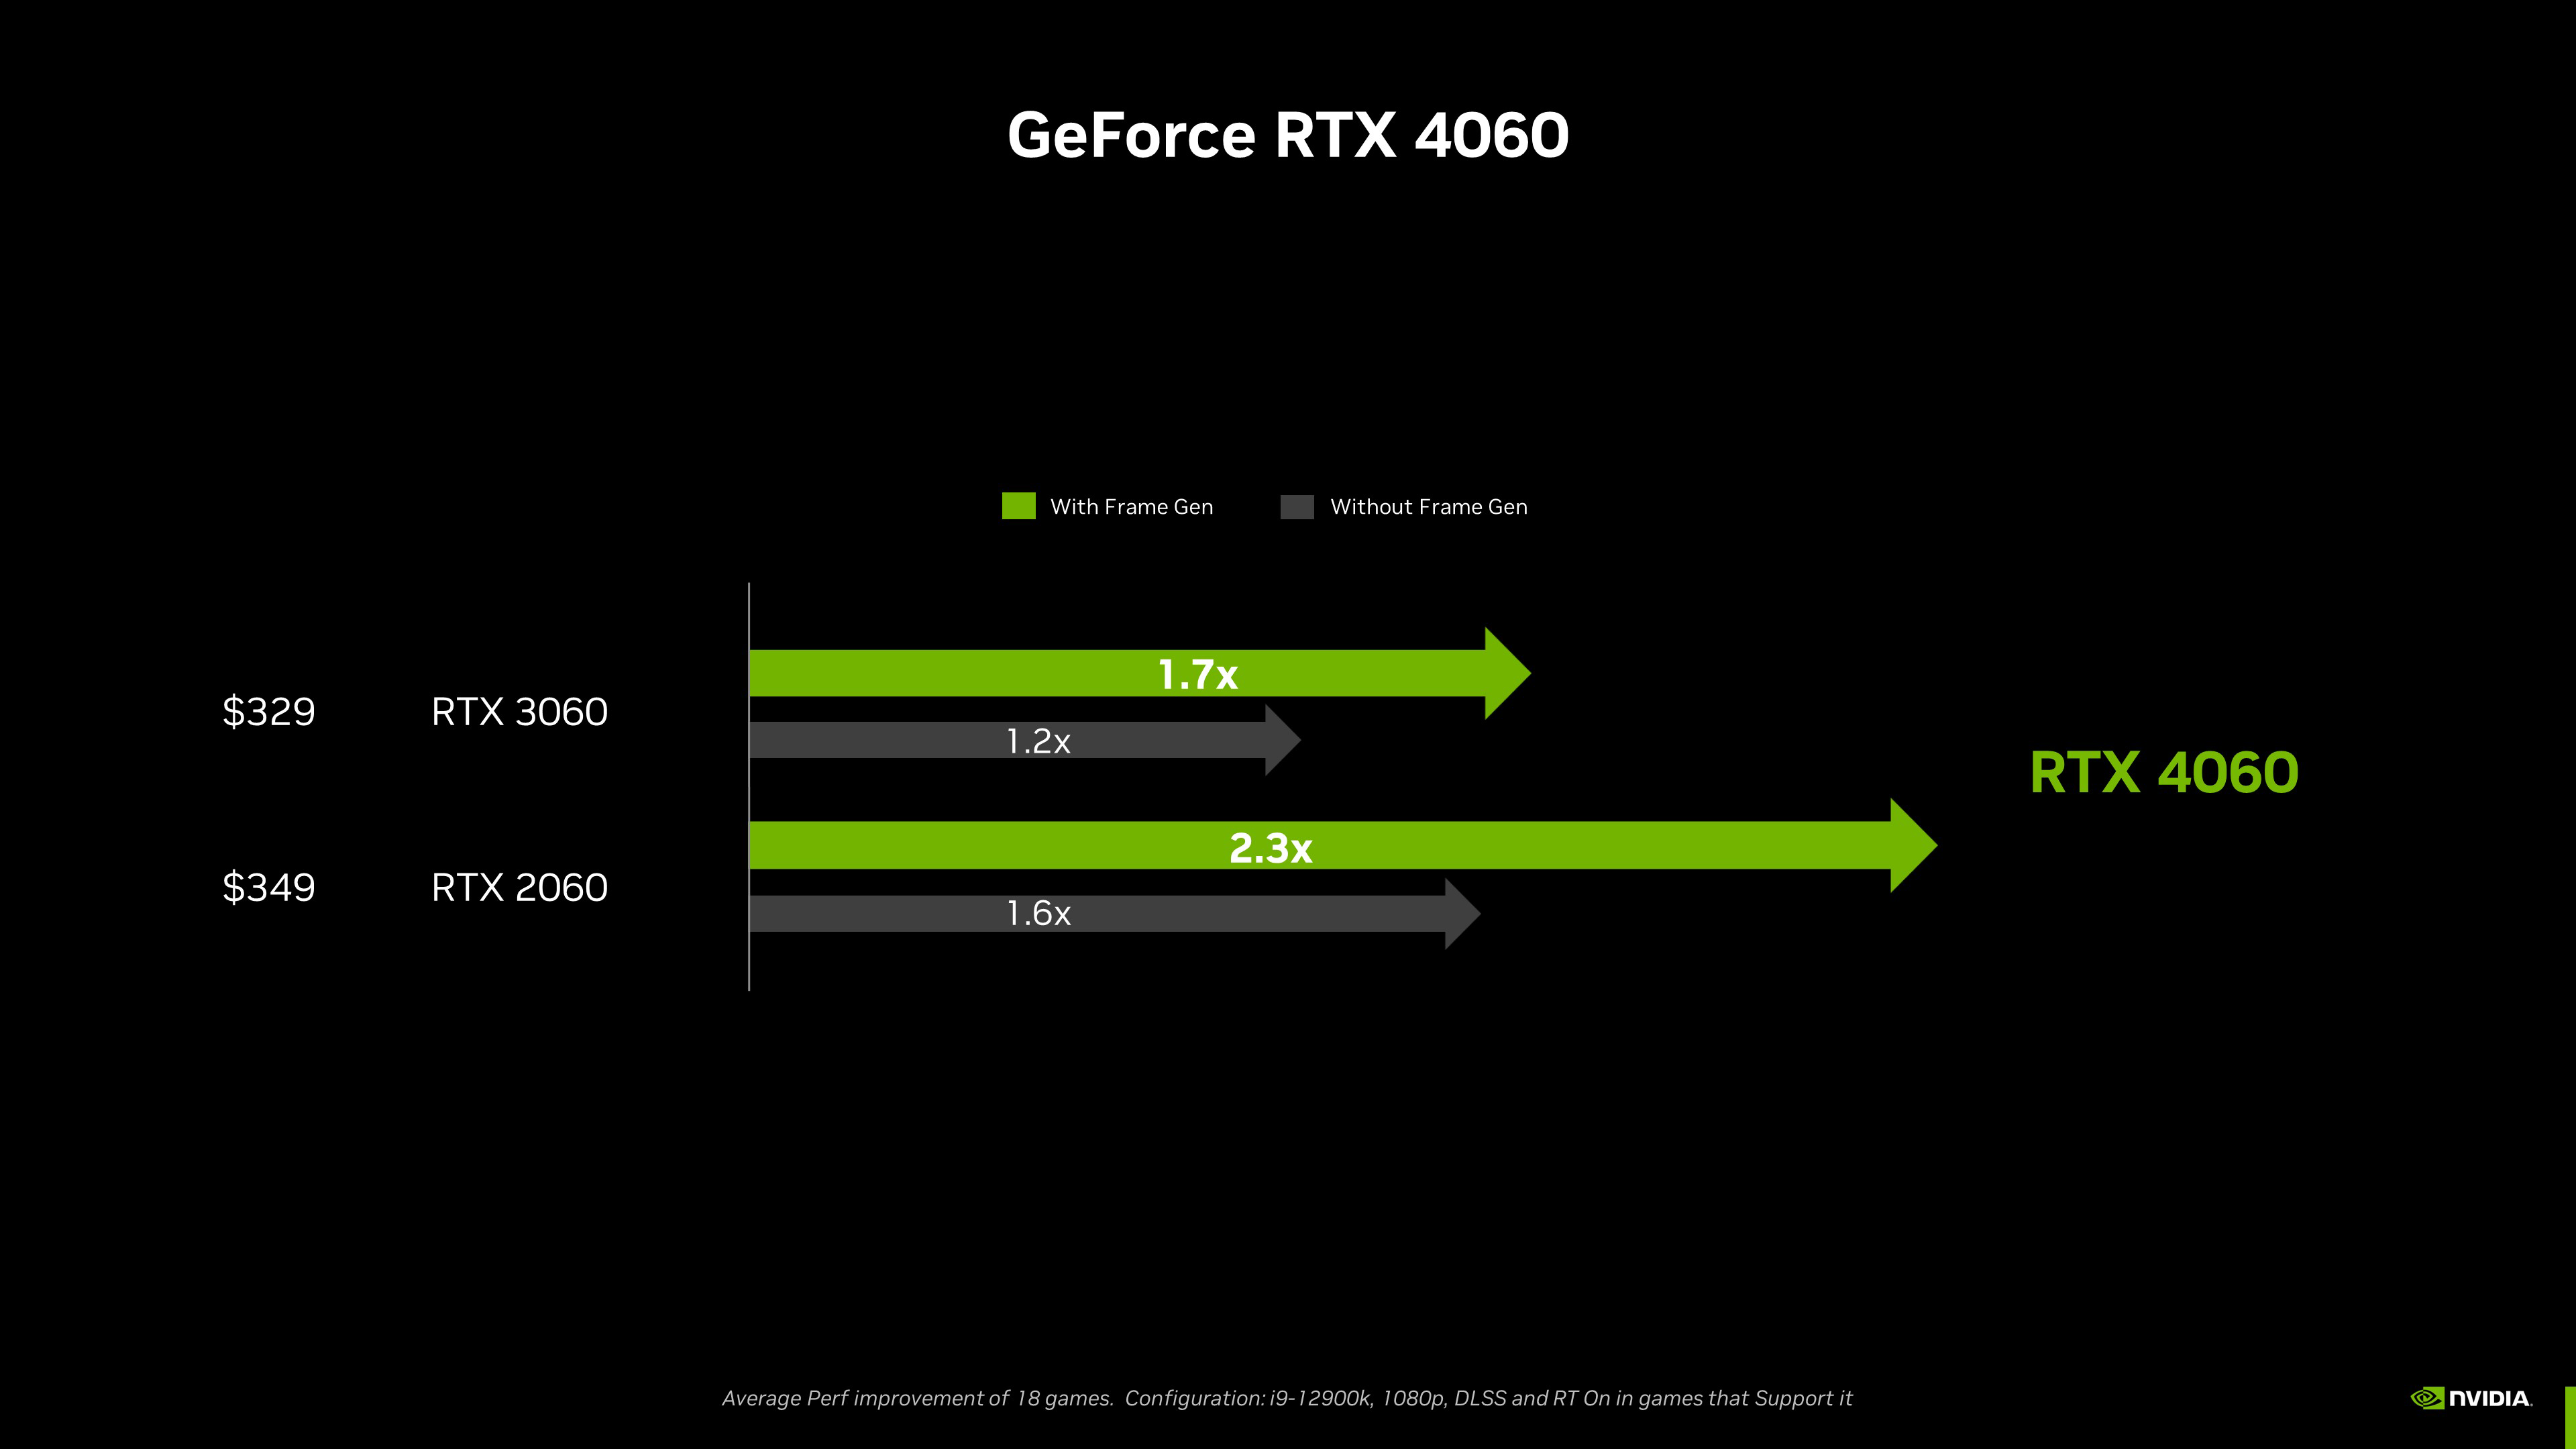 Do Not Buy: NVIDIA GeForce RTX 4060 Ti 8GB GPU Review & Benchmarks